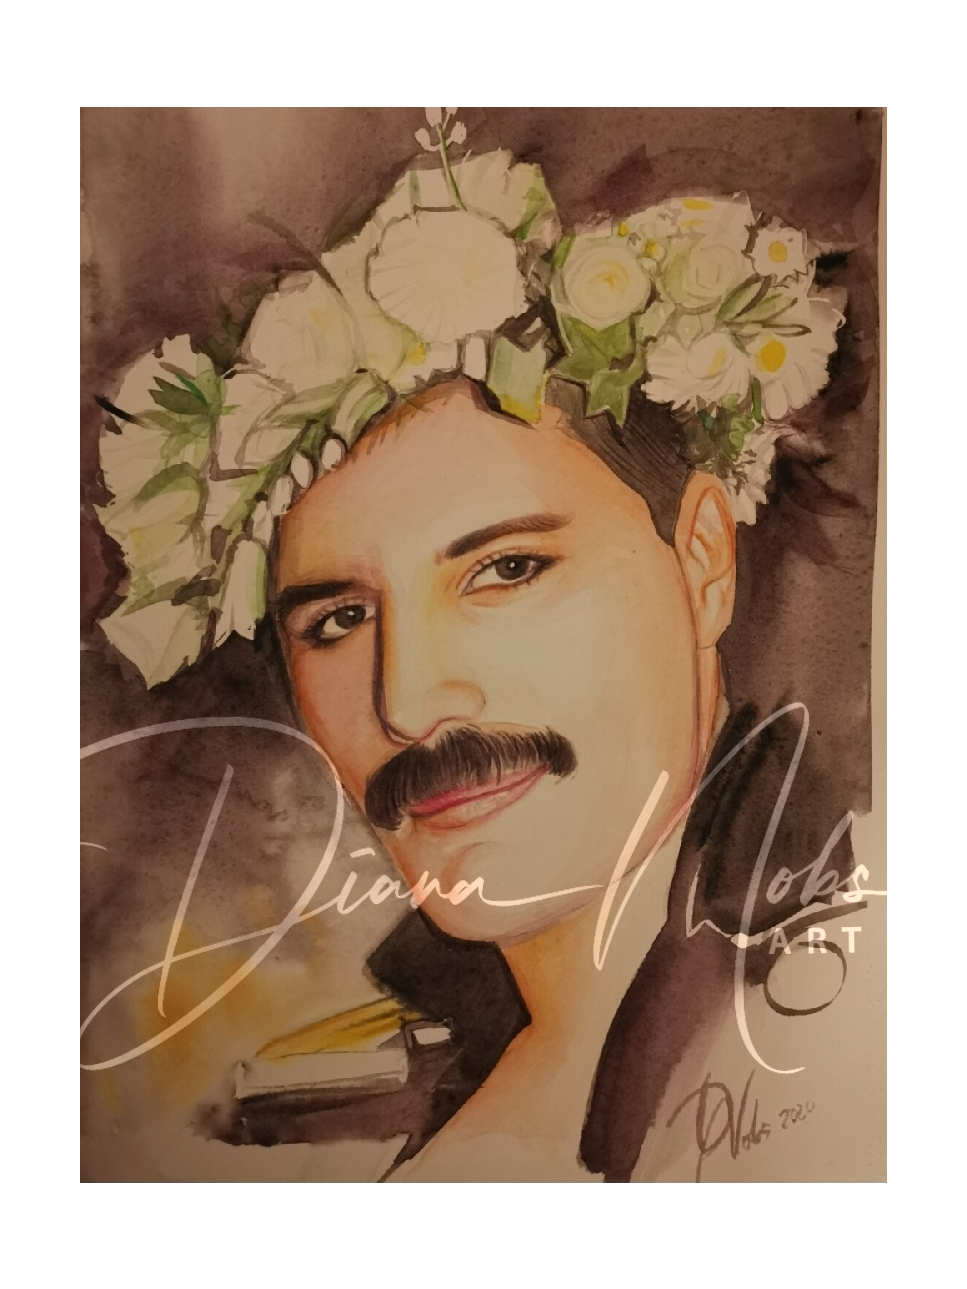 Freddie Mercury's portrait /Original